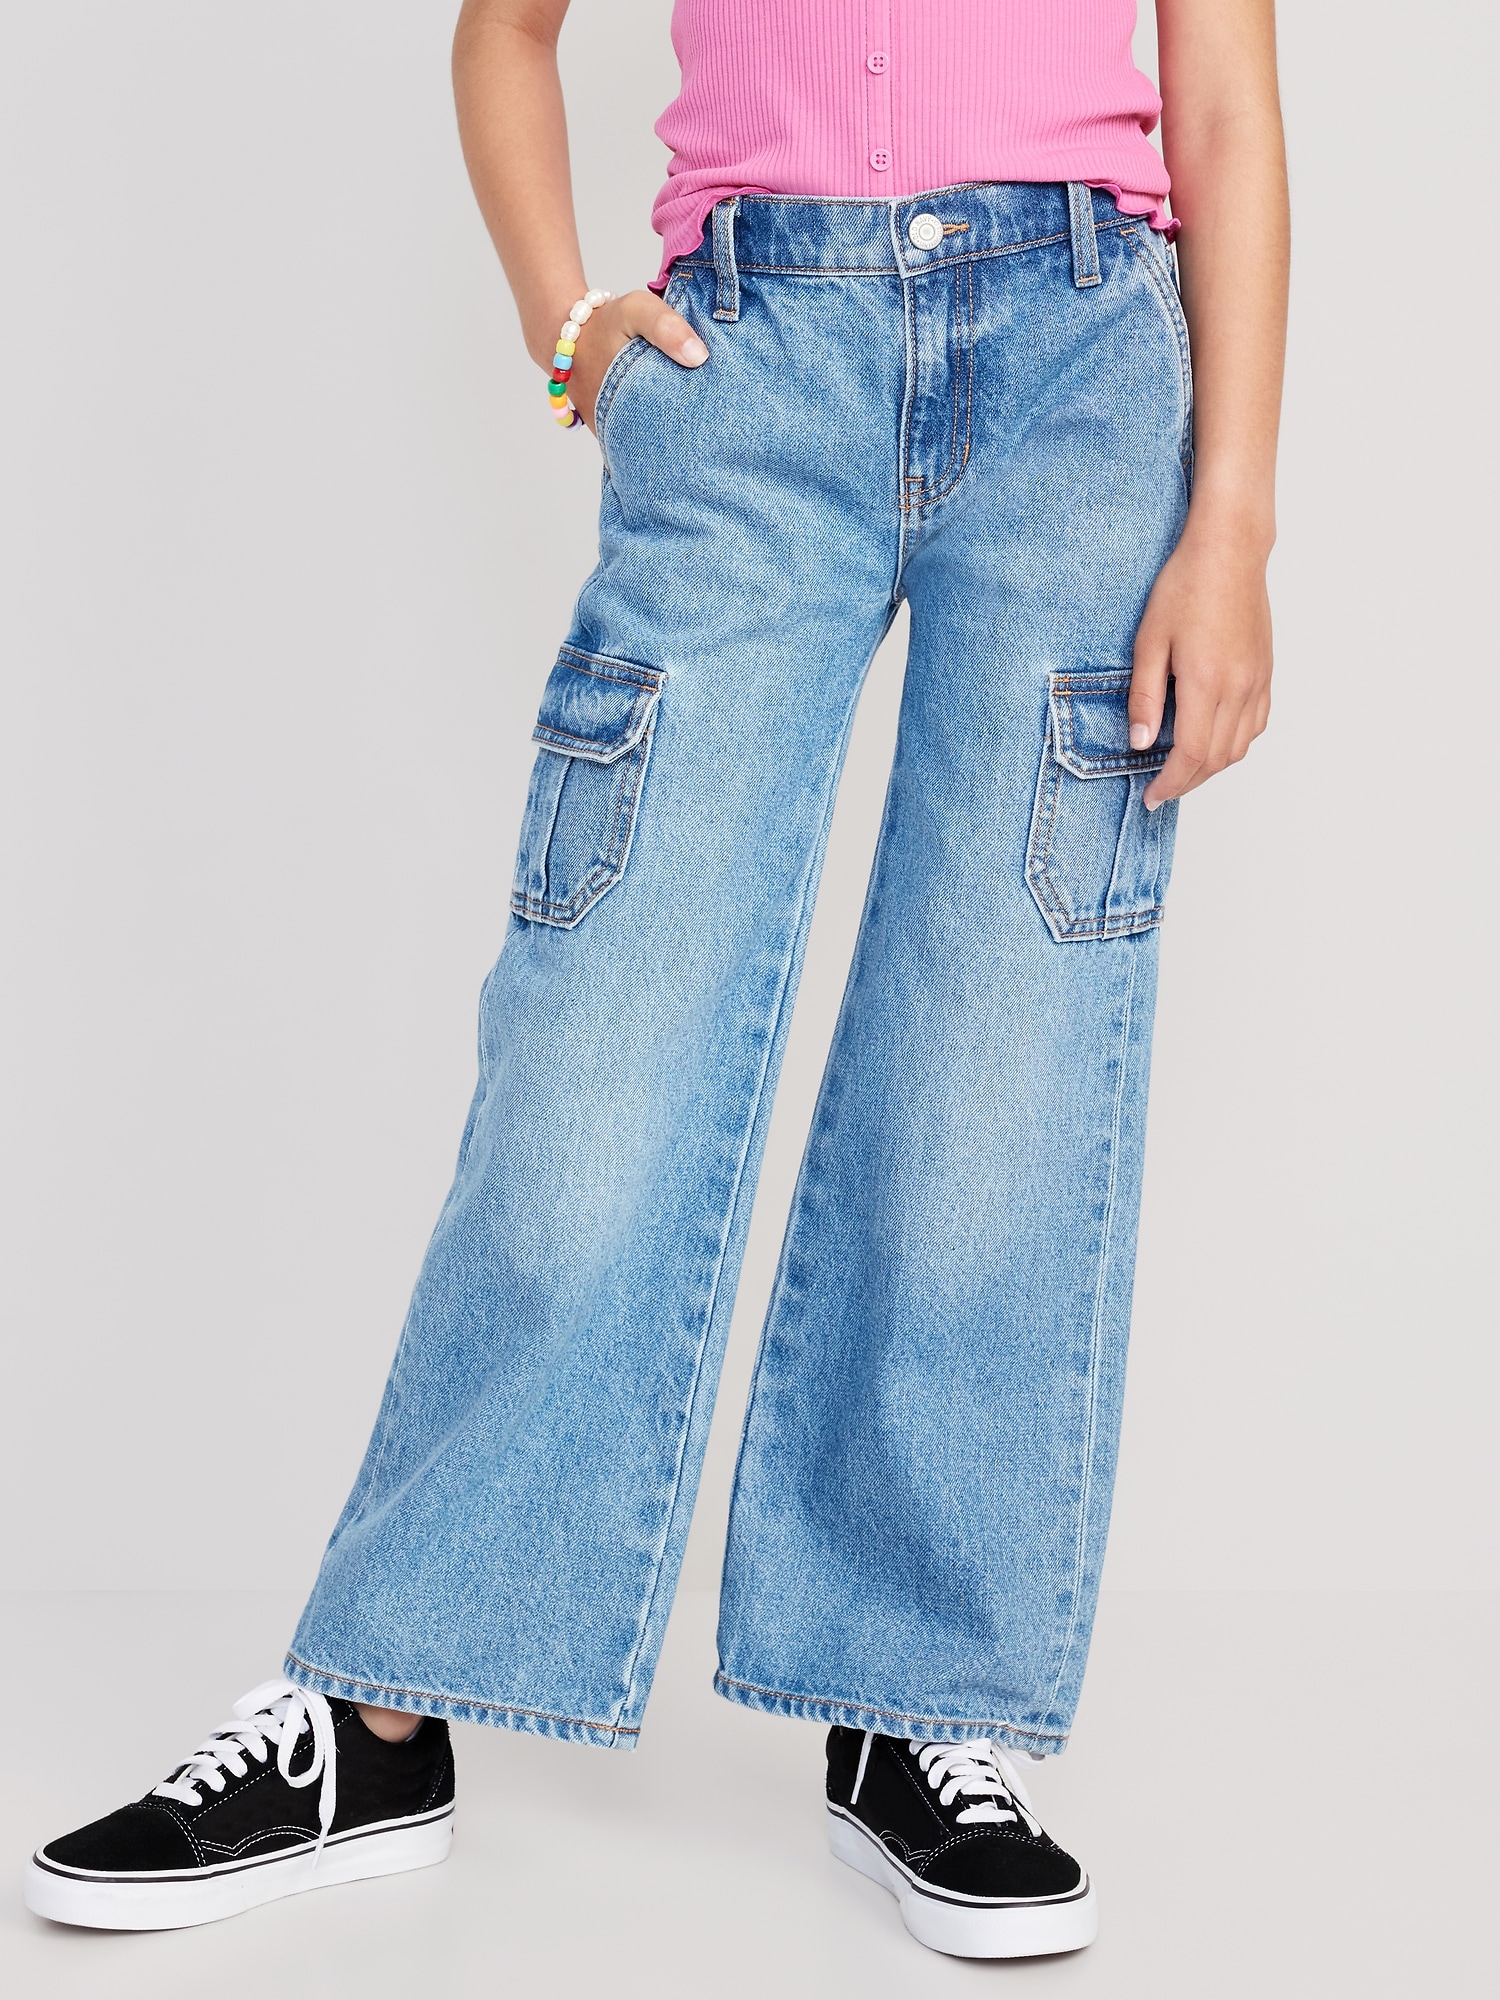 Jeans with Secret Pockets